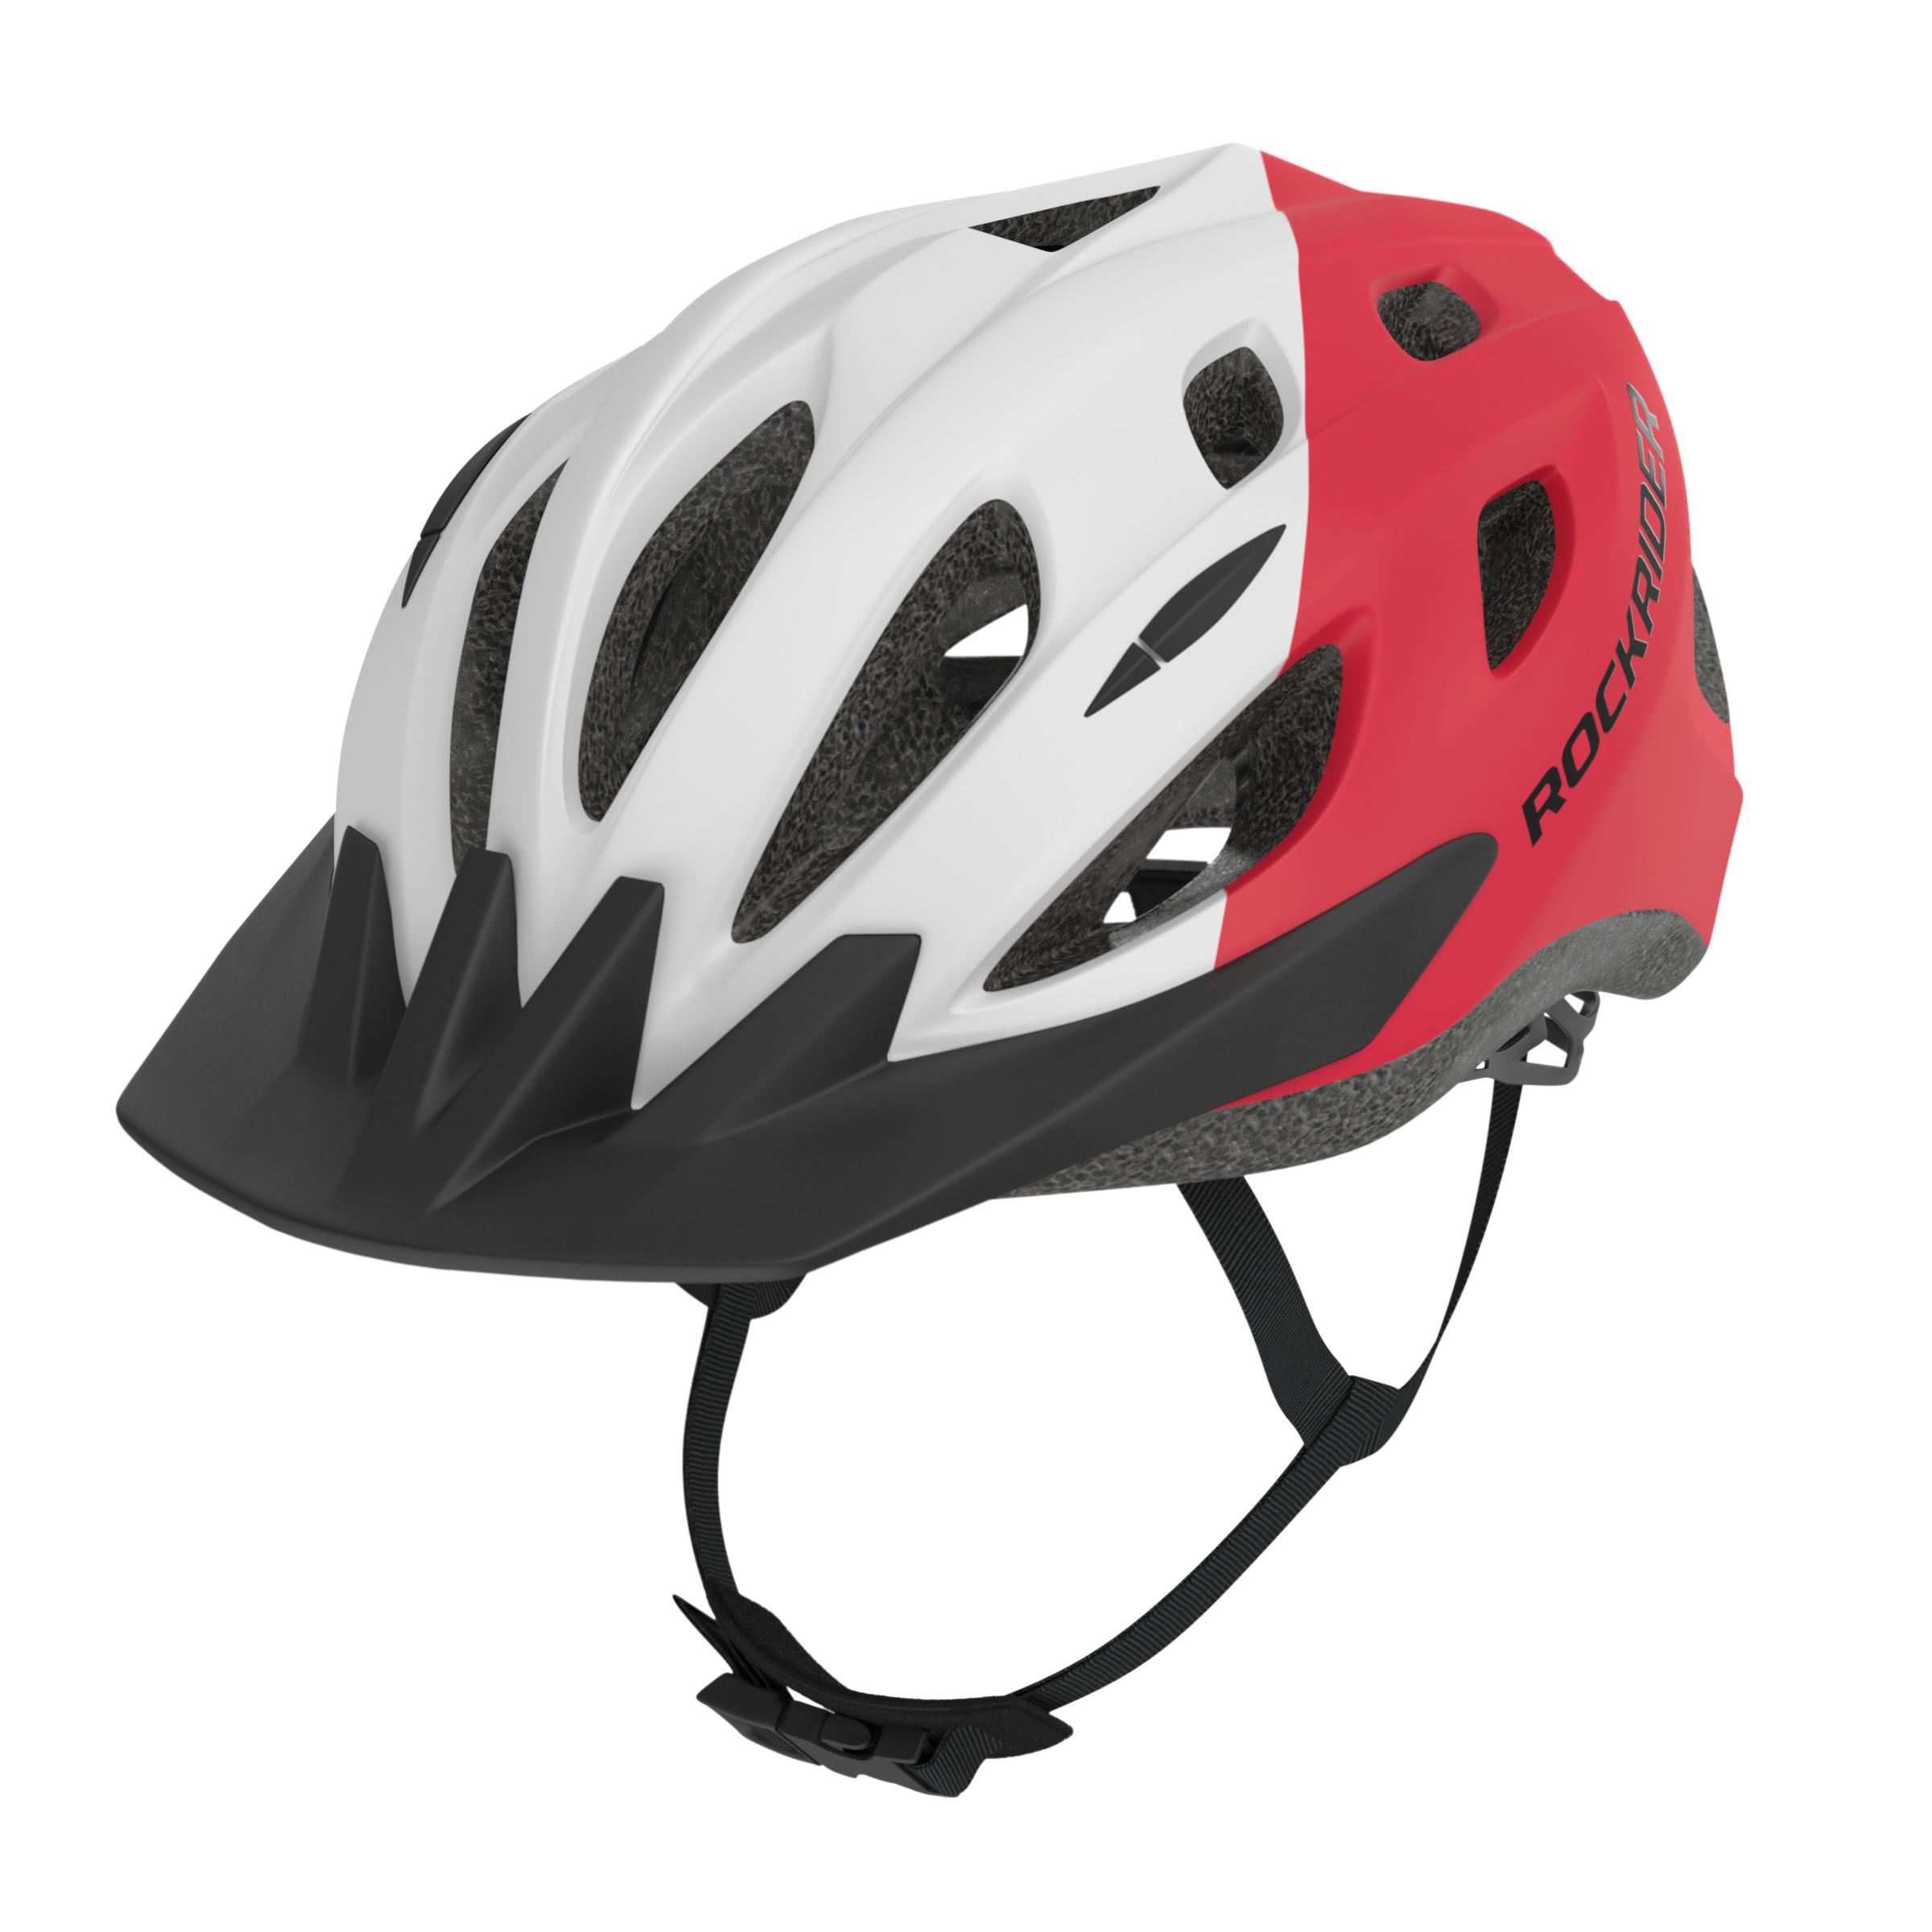 Kids' Mountain Bike Helmet 500 - Red 4/7